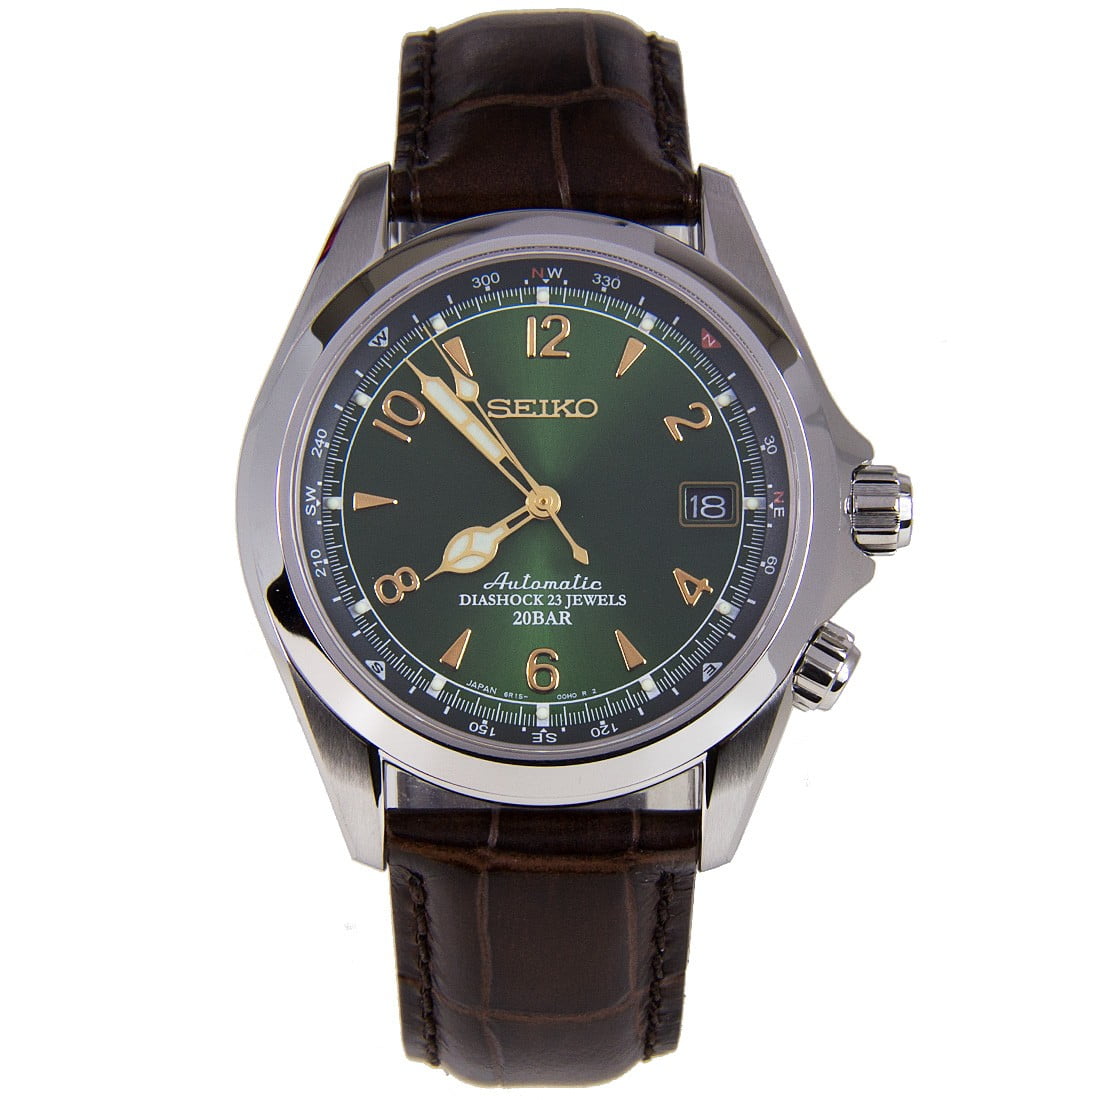 Seiko Men's Mechanical Alpinist Dashock 23 Jewels Automatic Leather Watch  SARB017 